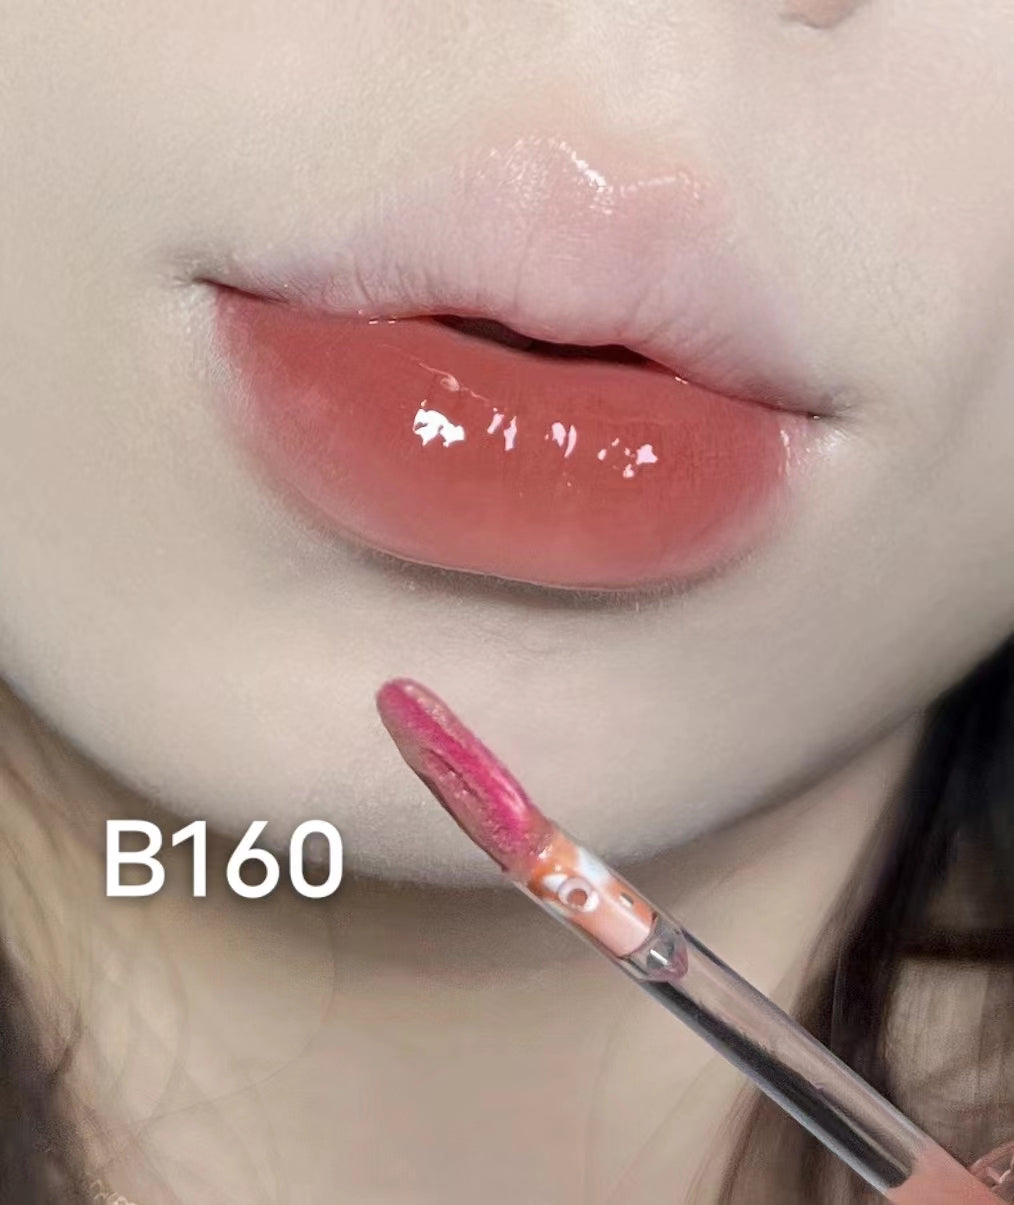 Pink Bear Bubble Mirror-like Hydrating Lip Glaze 皮可熊泡泡镜面水光唇釉 2.5g